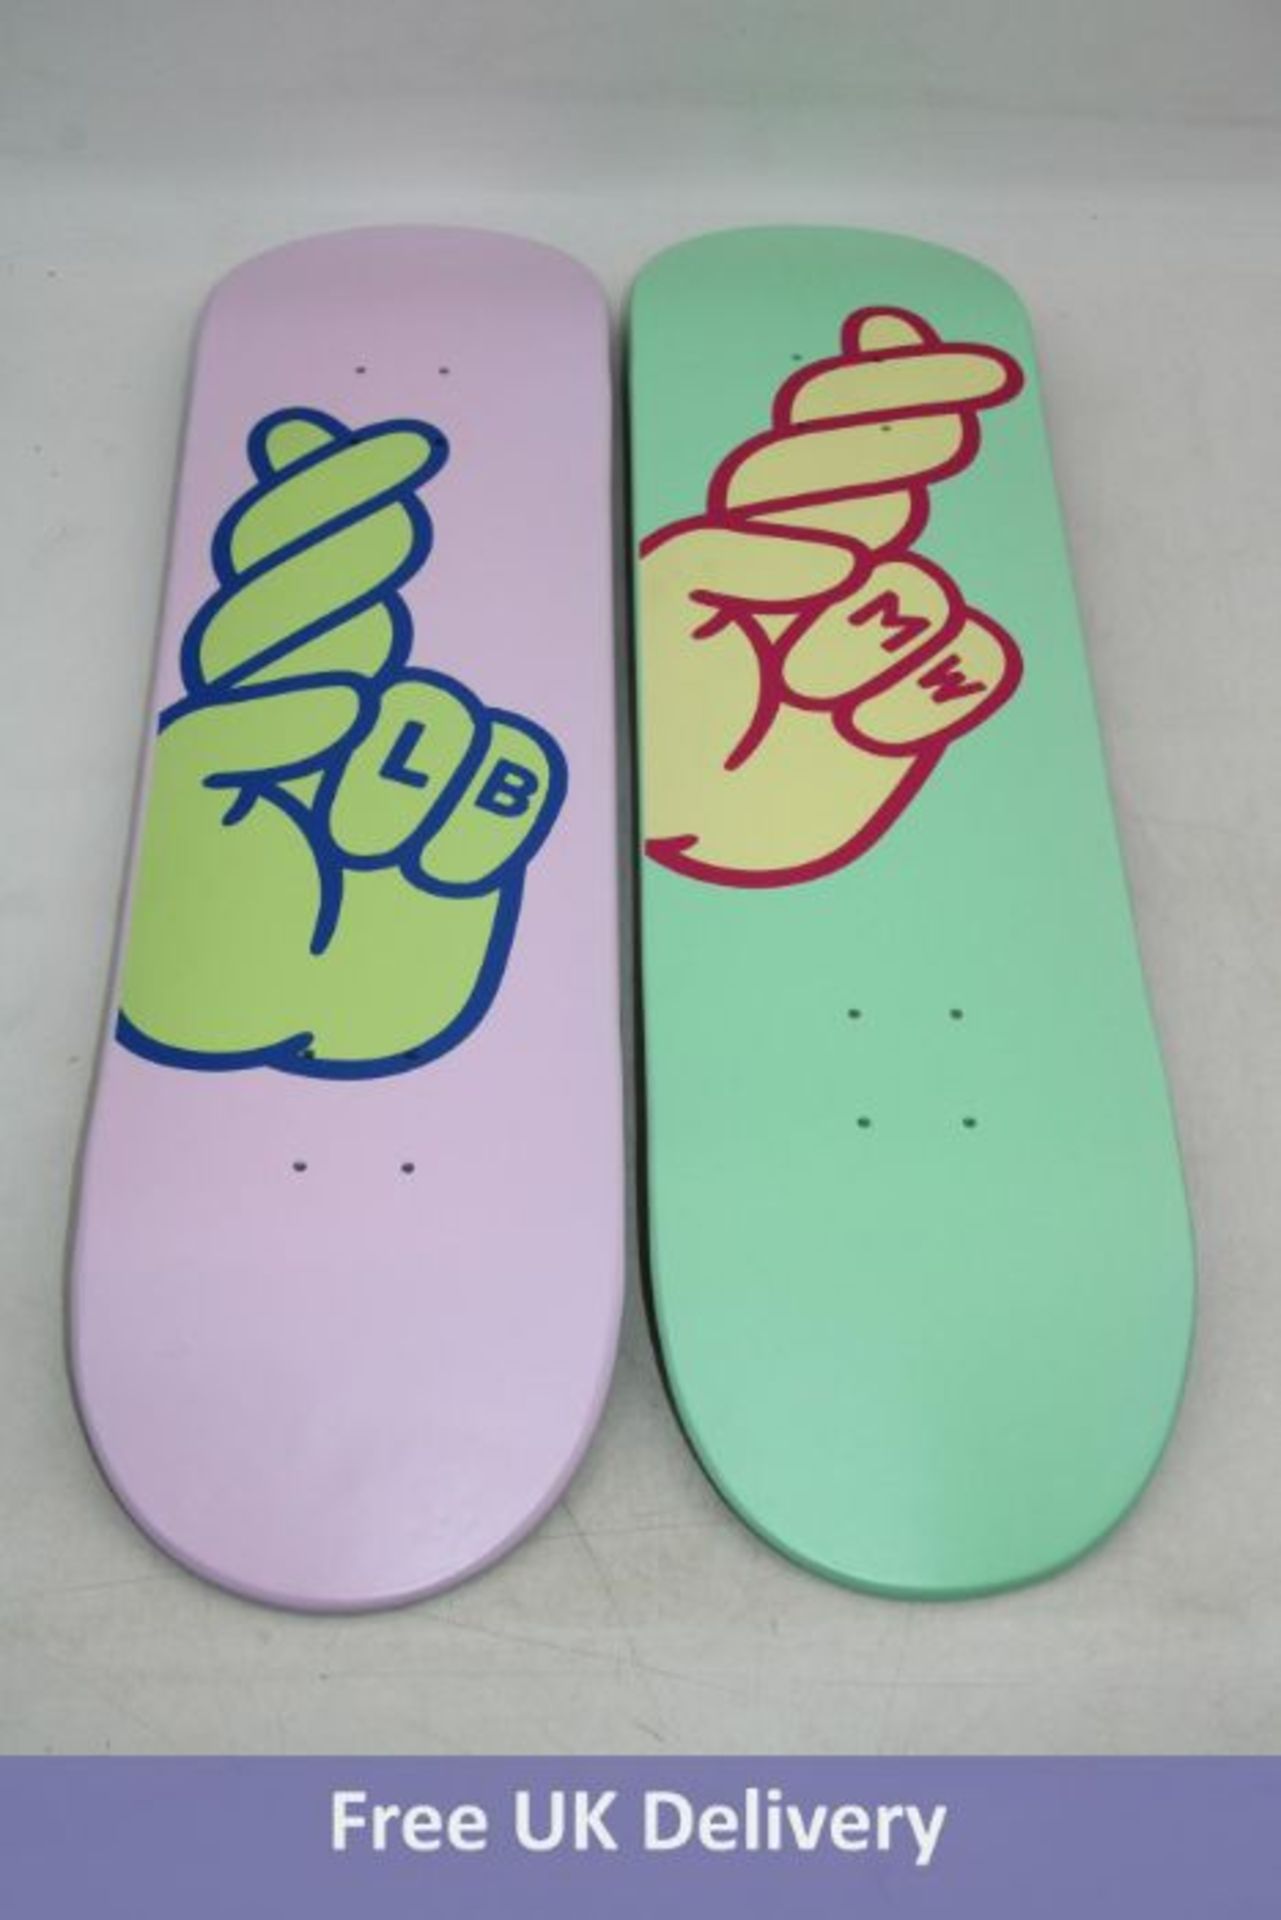 Seven Fingers Crossed Art Work Skateboard Deck, Pink/Green/Orange. Slightly Marked